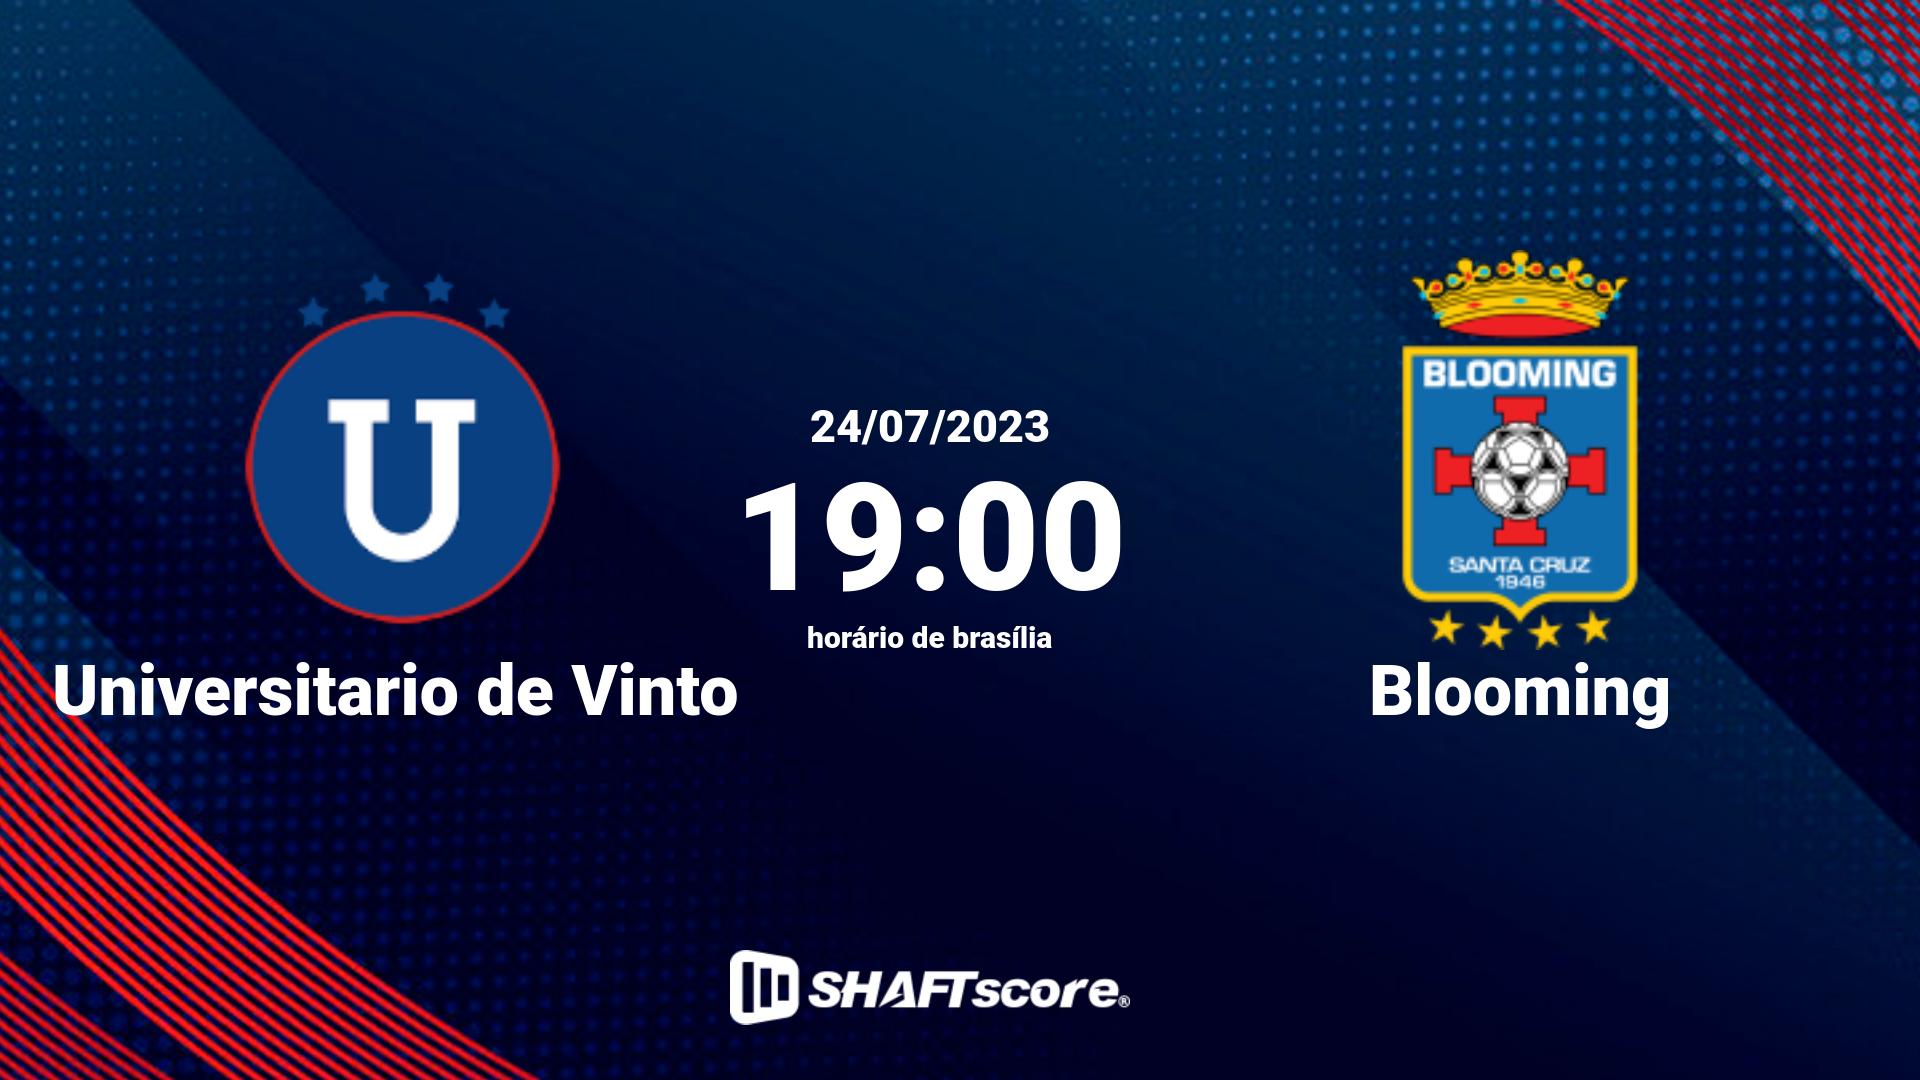 Estatísticas do jogo Universitario de Vinto vs Blooming 24.07 19:00